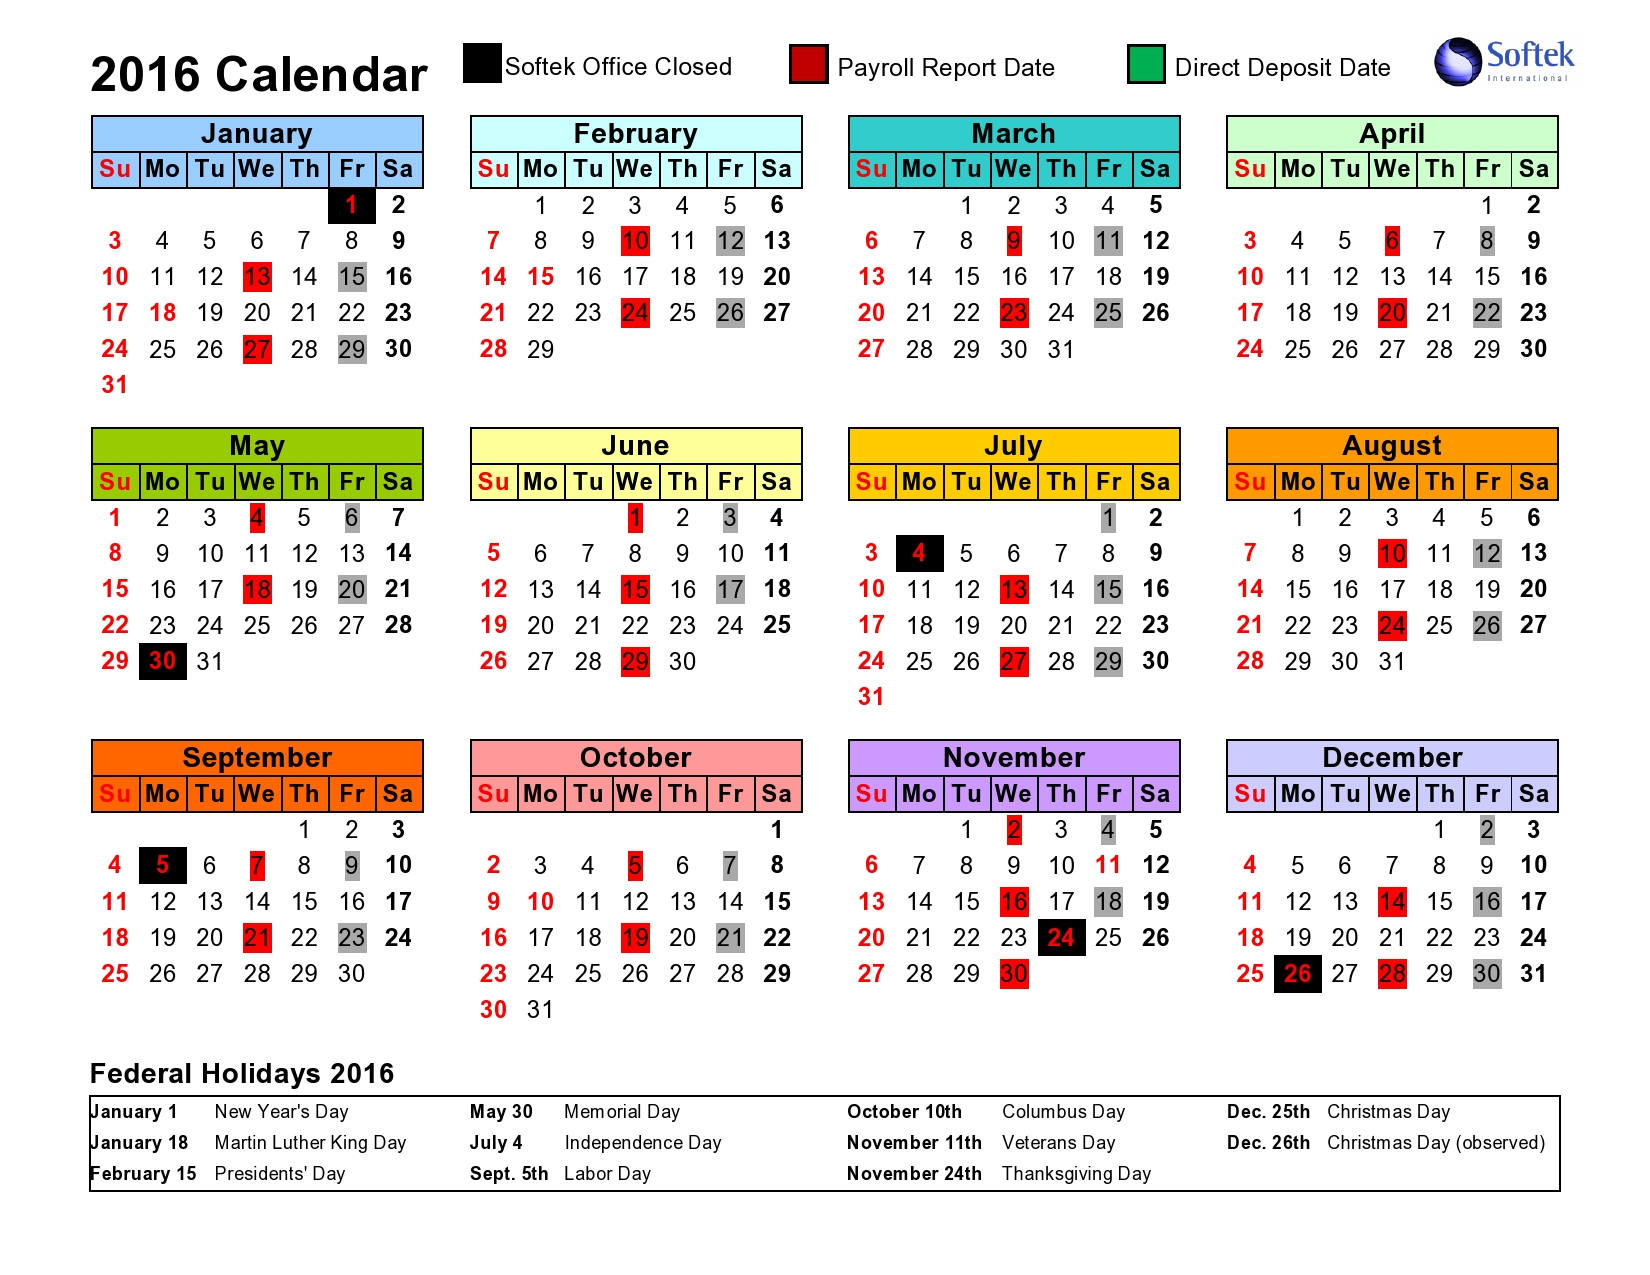 Federal Employee Pay Period Calendar 2020 | Free Printable